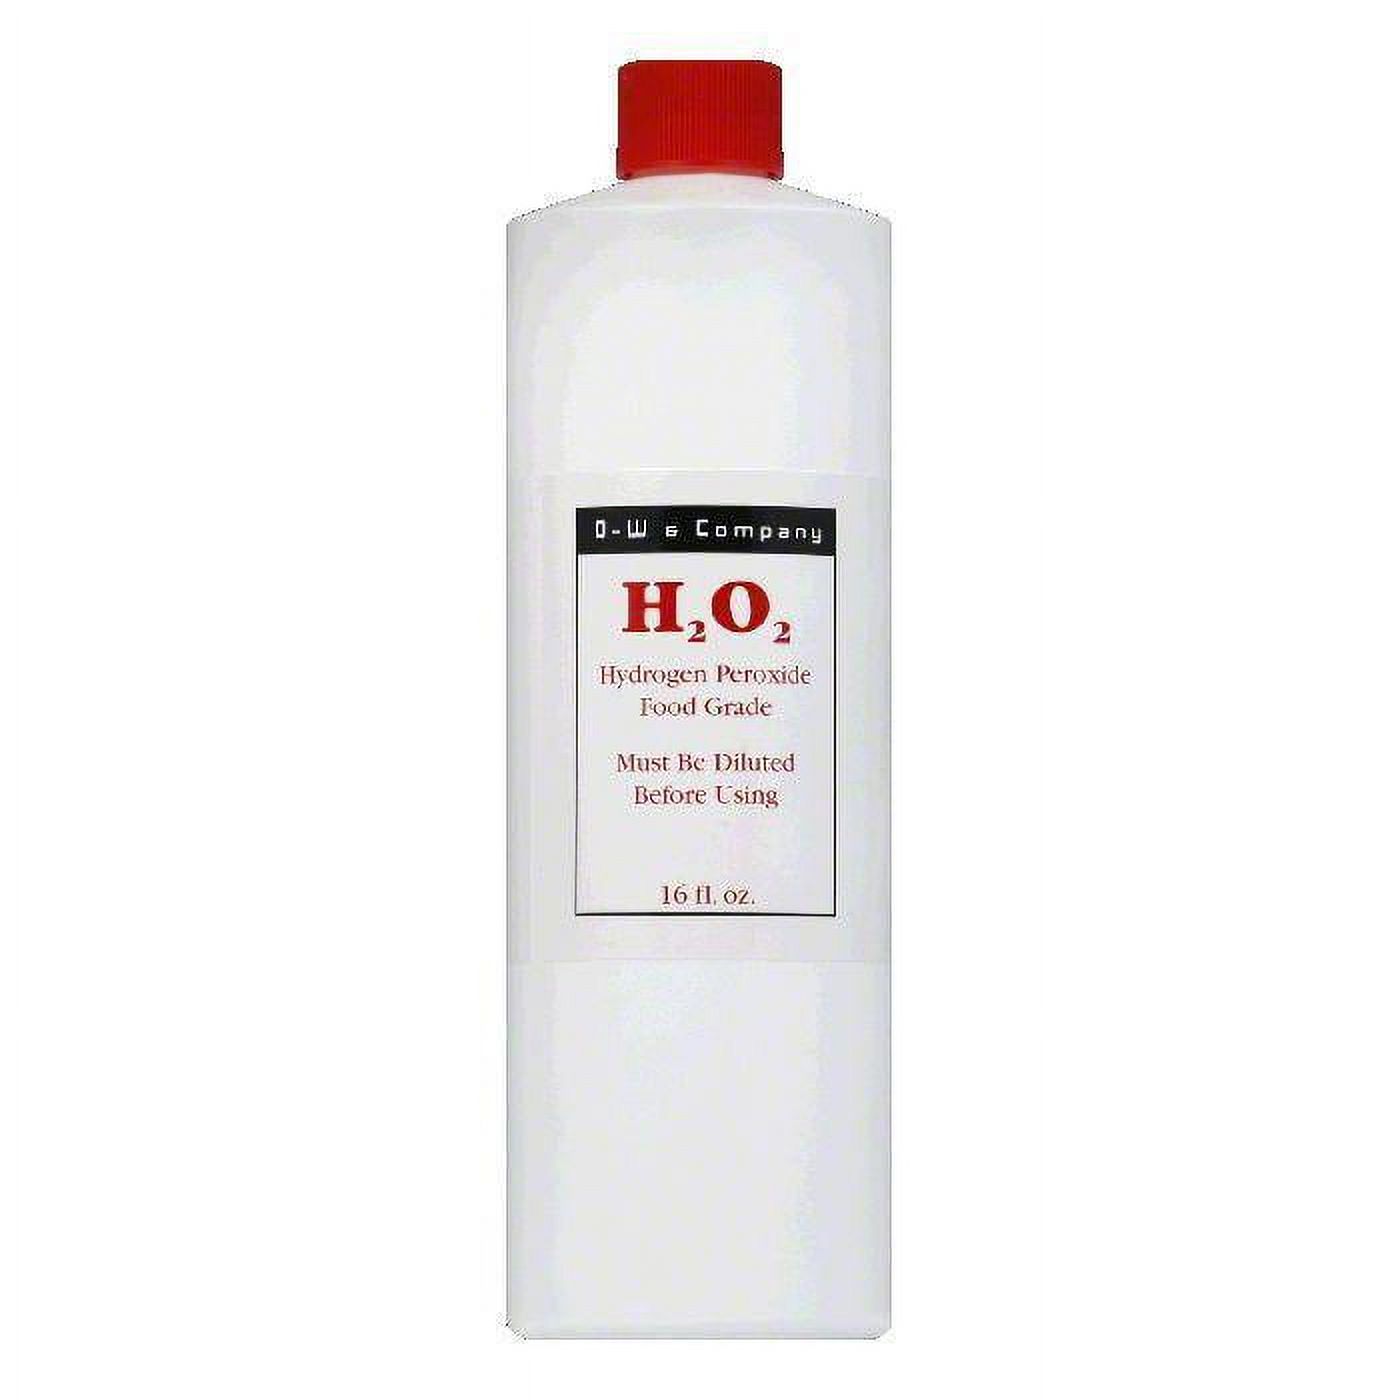 O W Food Grade H2O2 Hydrogen Peroxide, 16 Oz - image 1 of 1